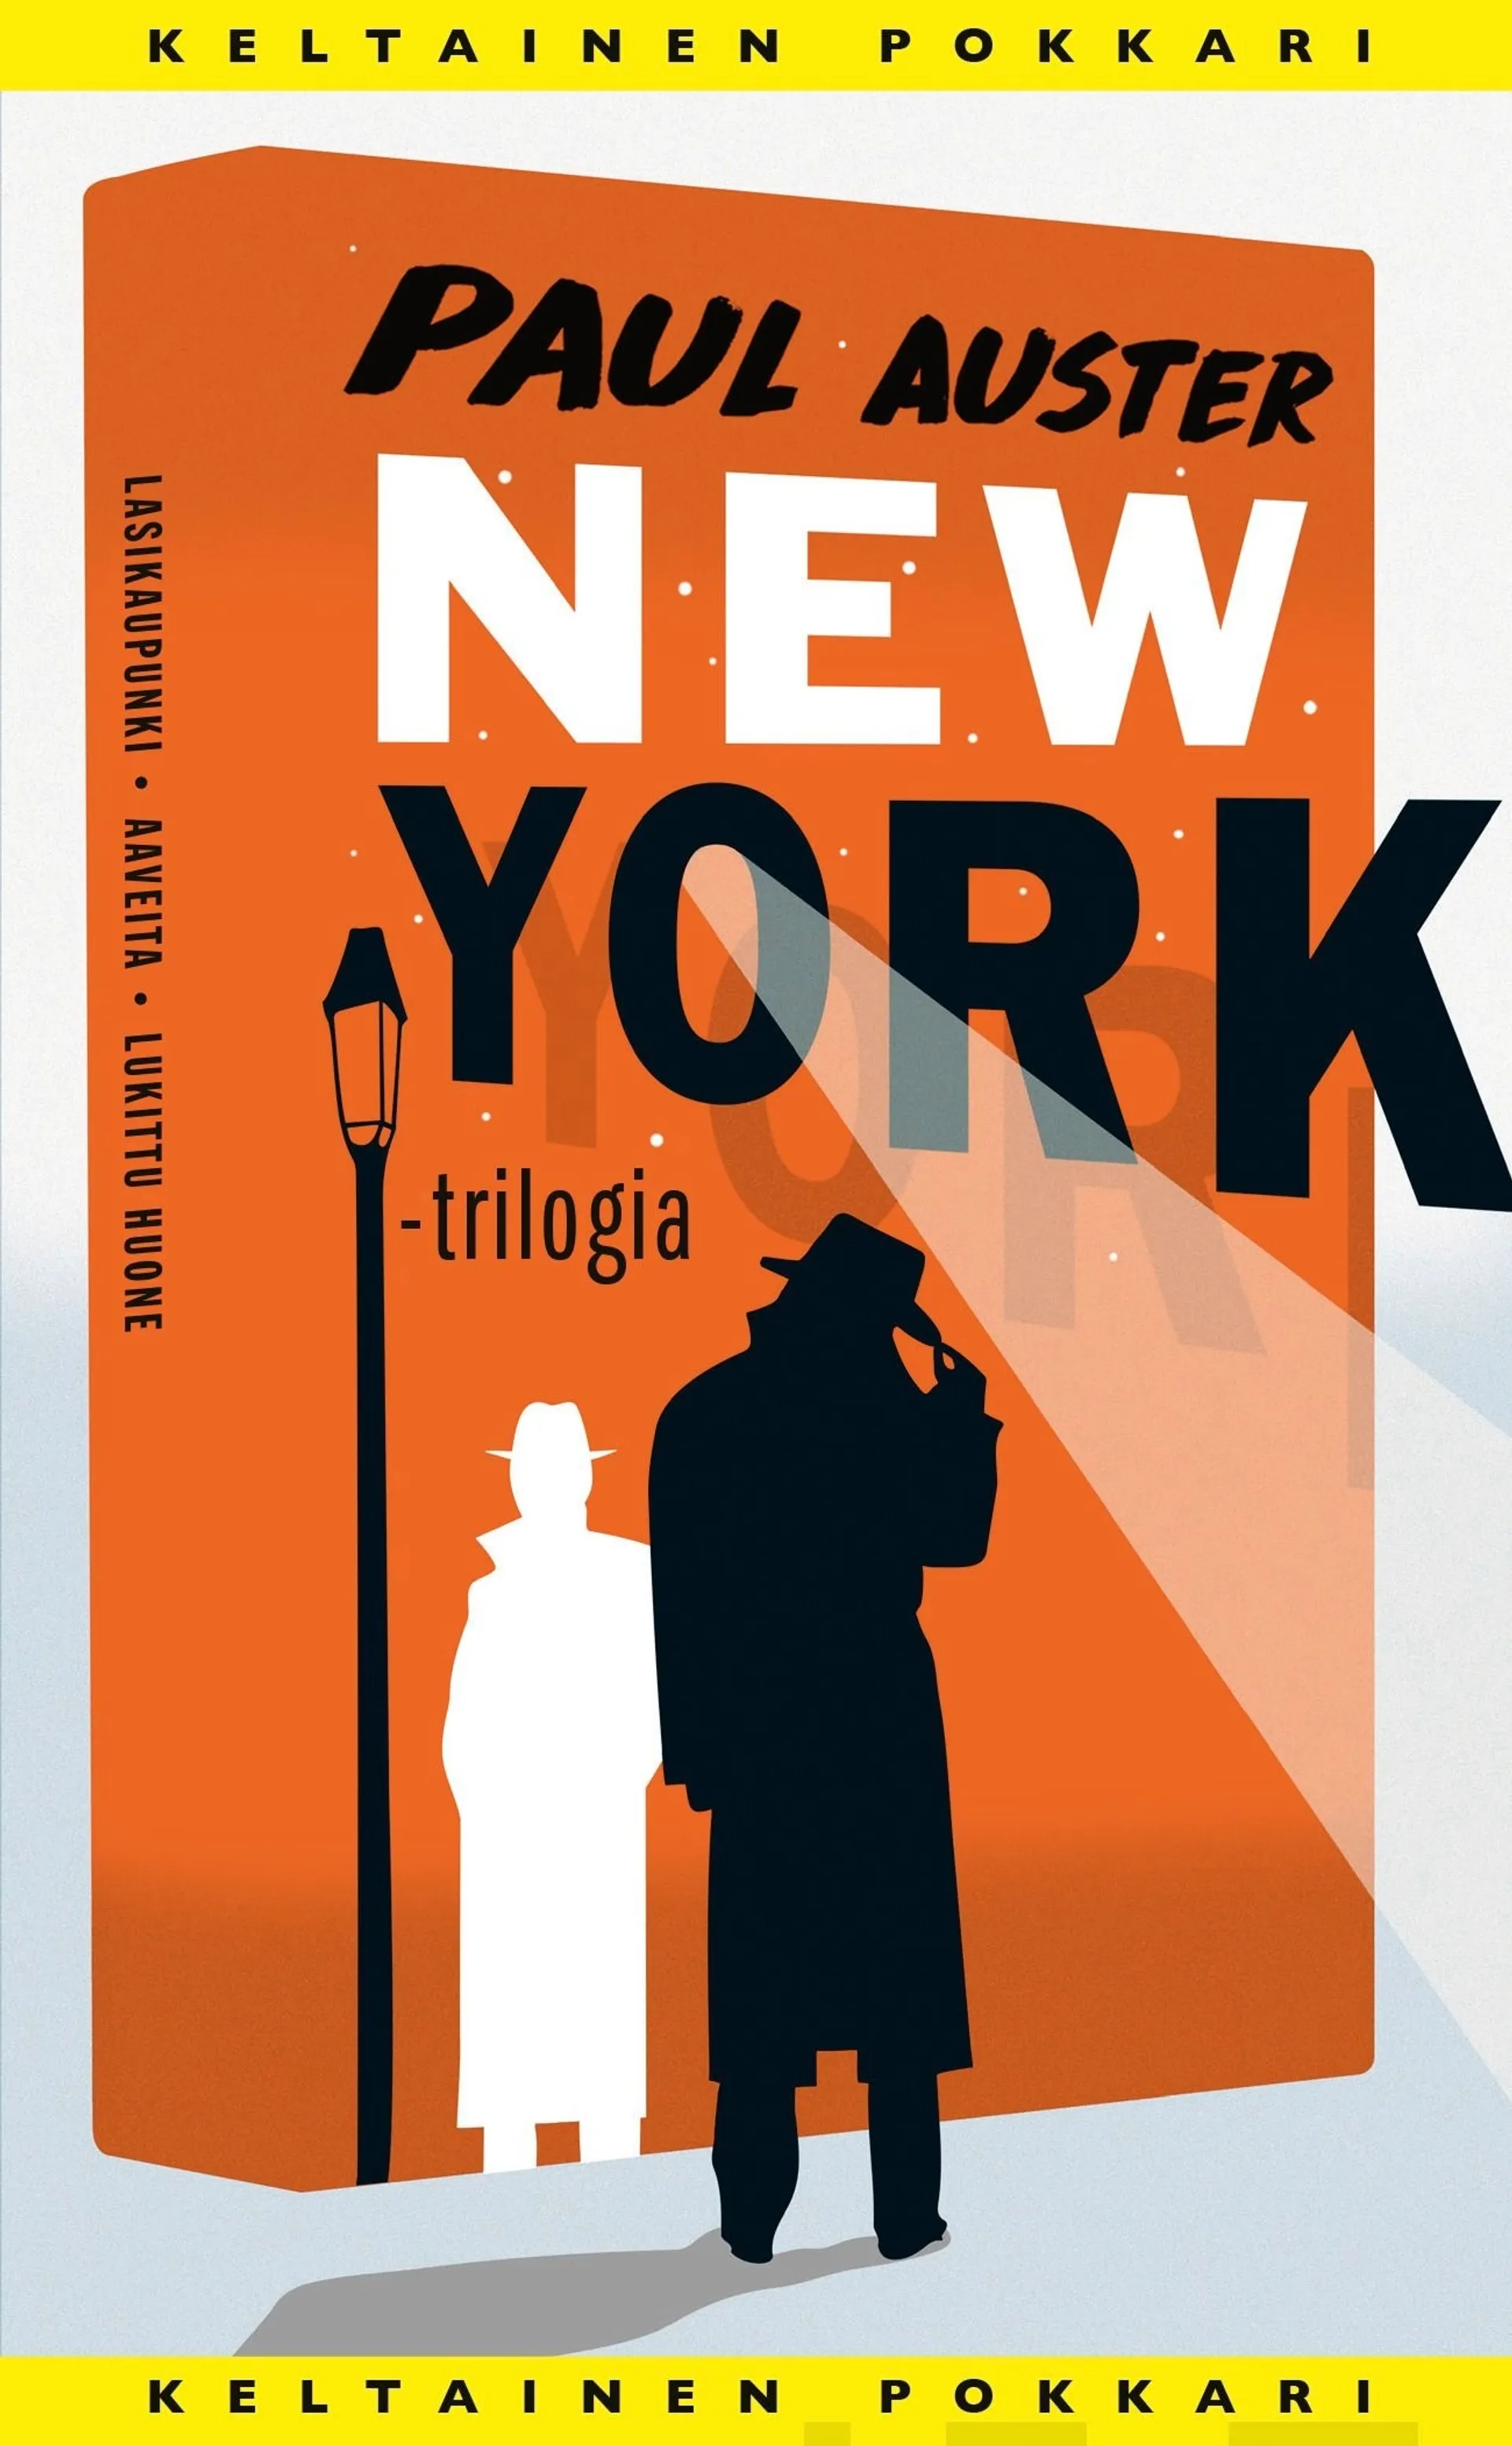 Auster, New York -trilogia